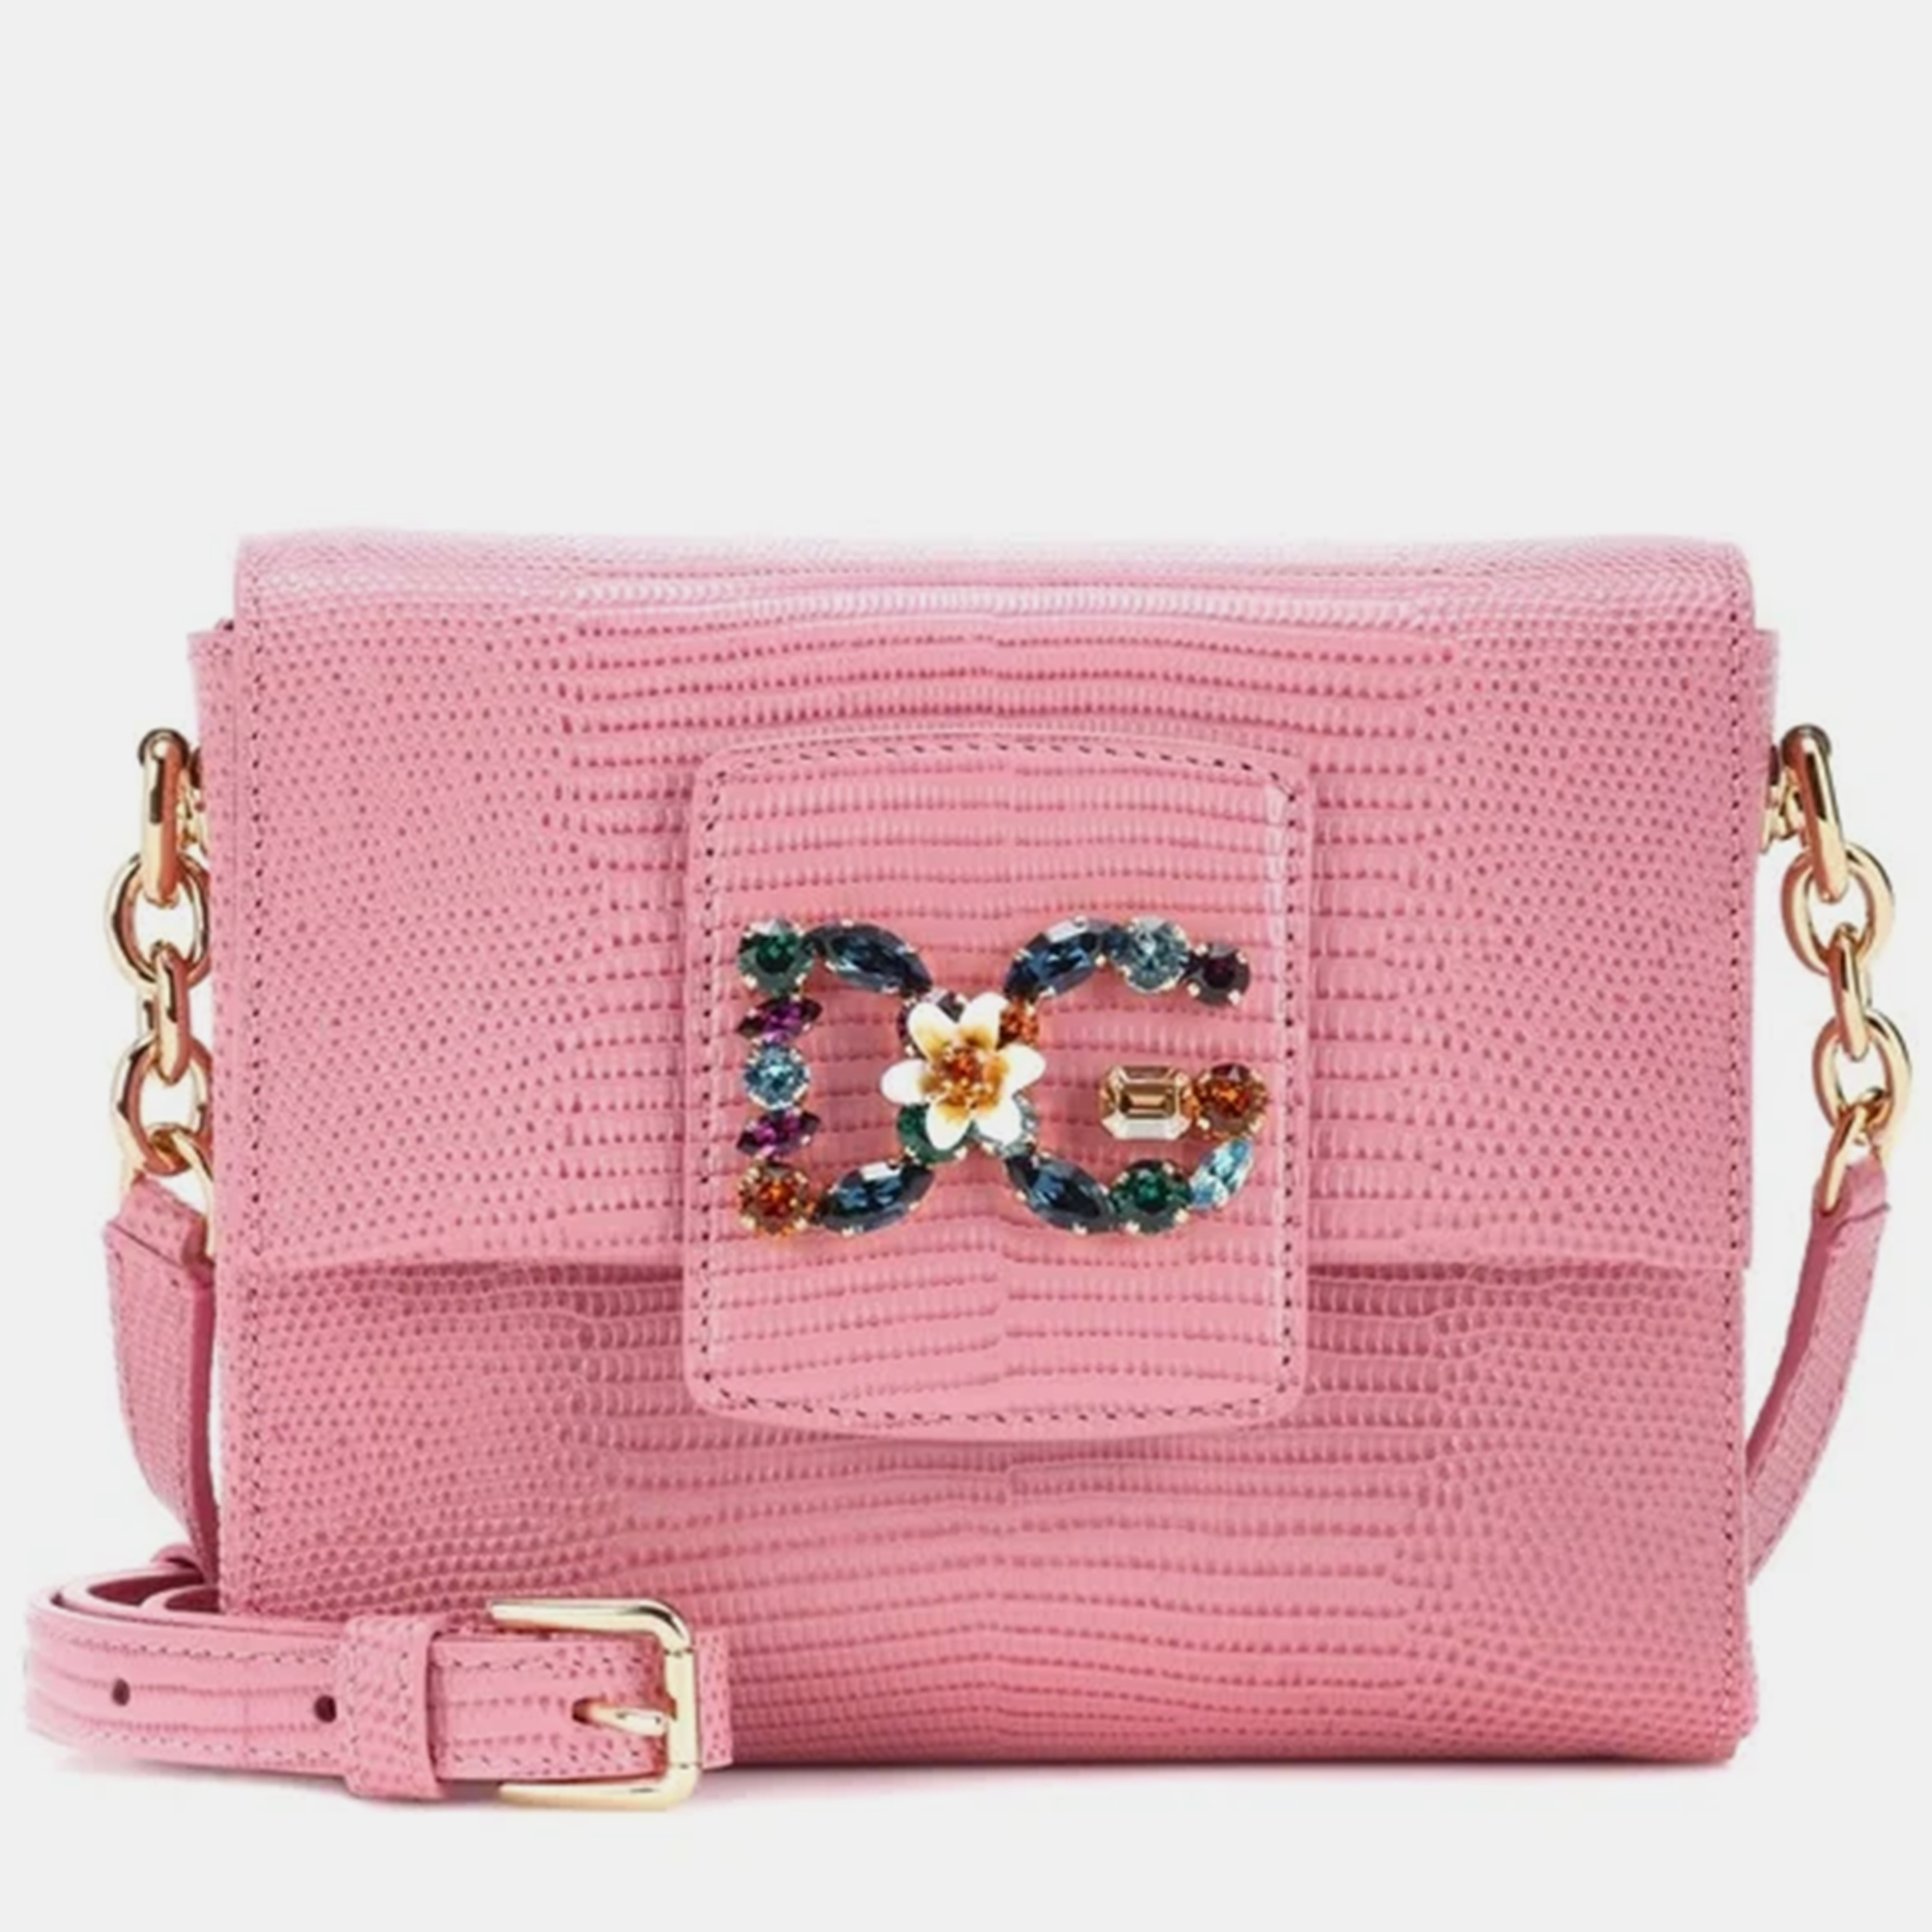 Dolce & Gabbana Pink  Leather  Medium Iguana-Embossed Millennials Shoulder Bag